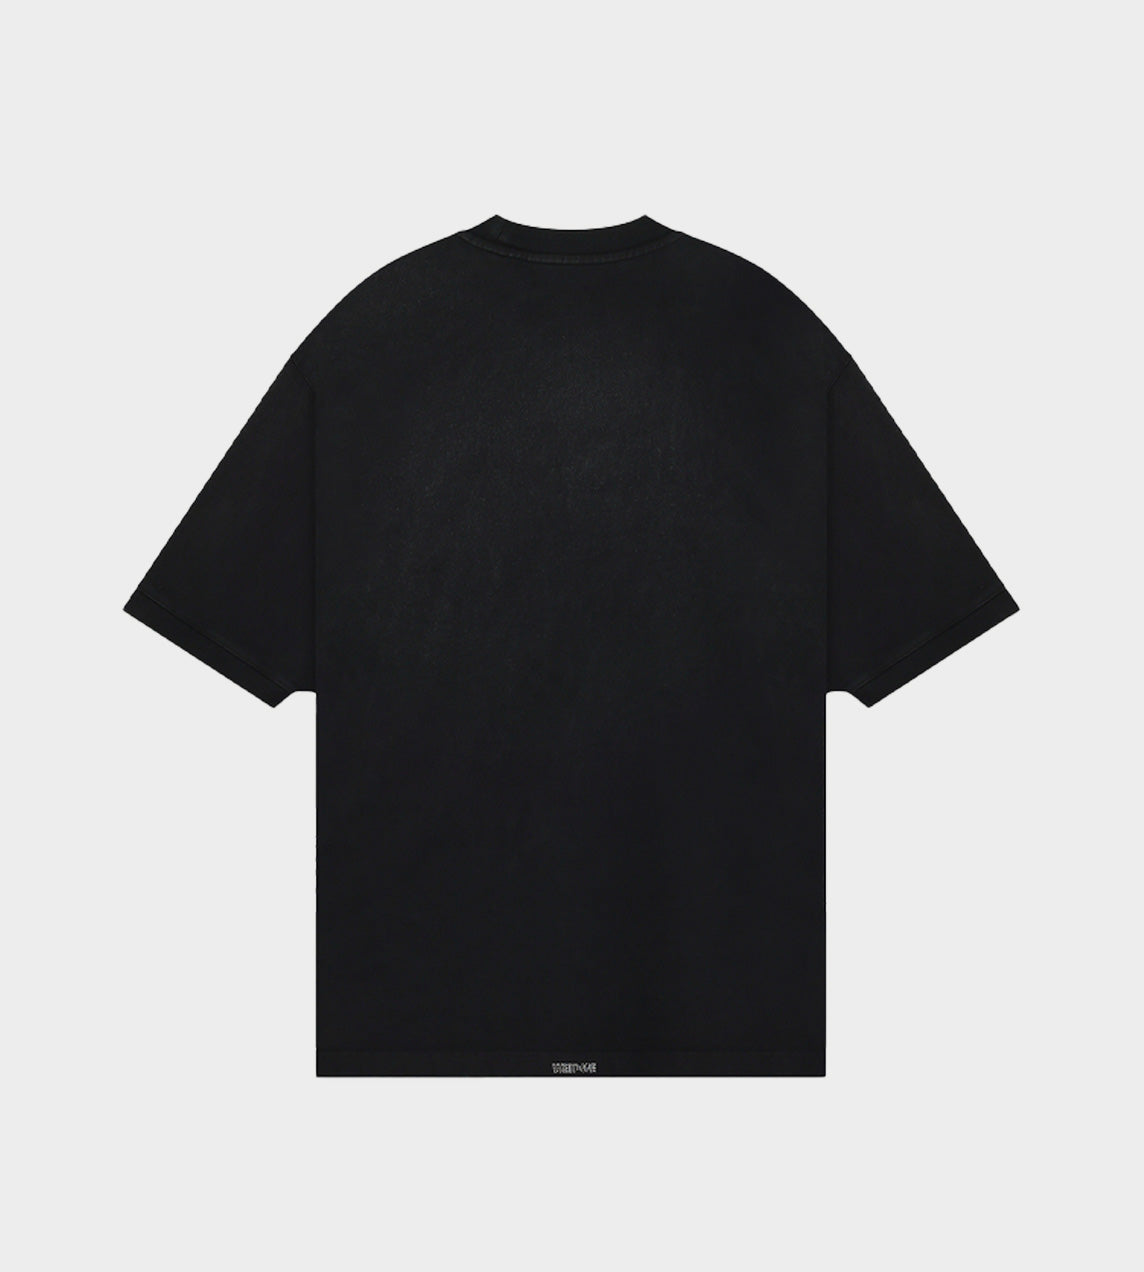 WE11DONE - Heavenly Logo Print T-Shirt Black